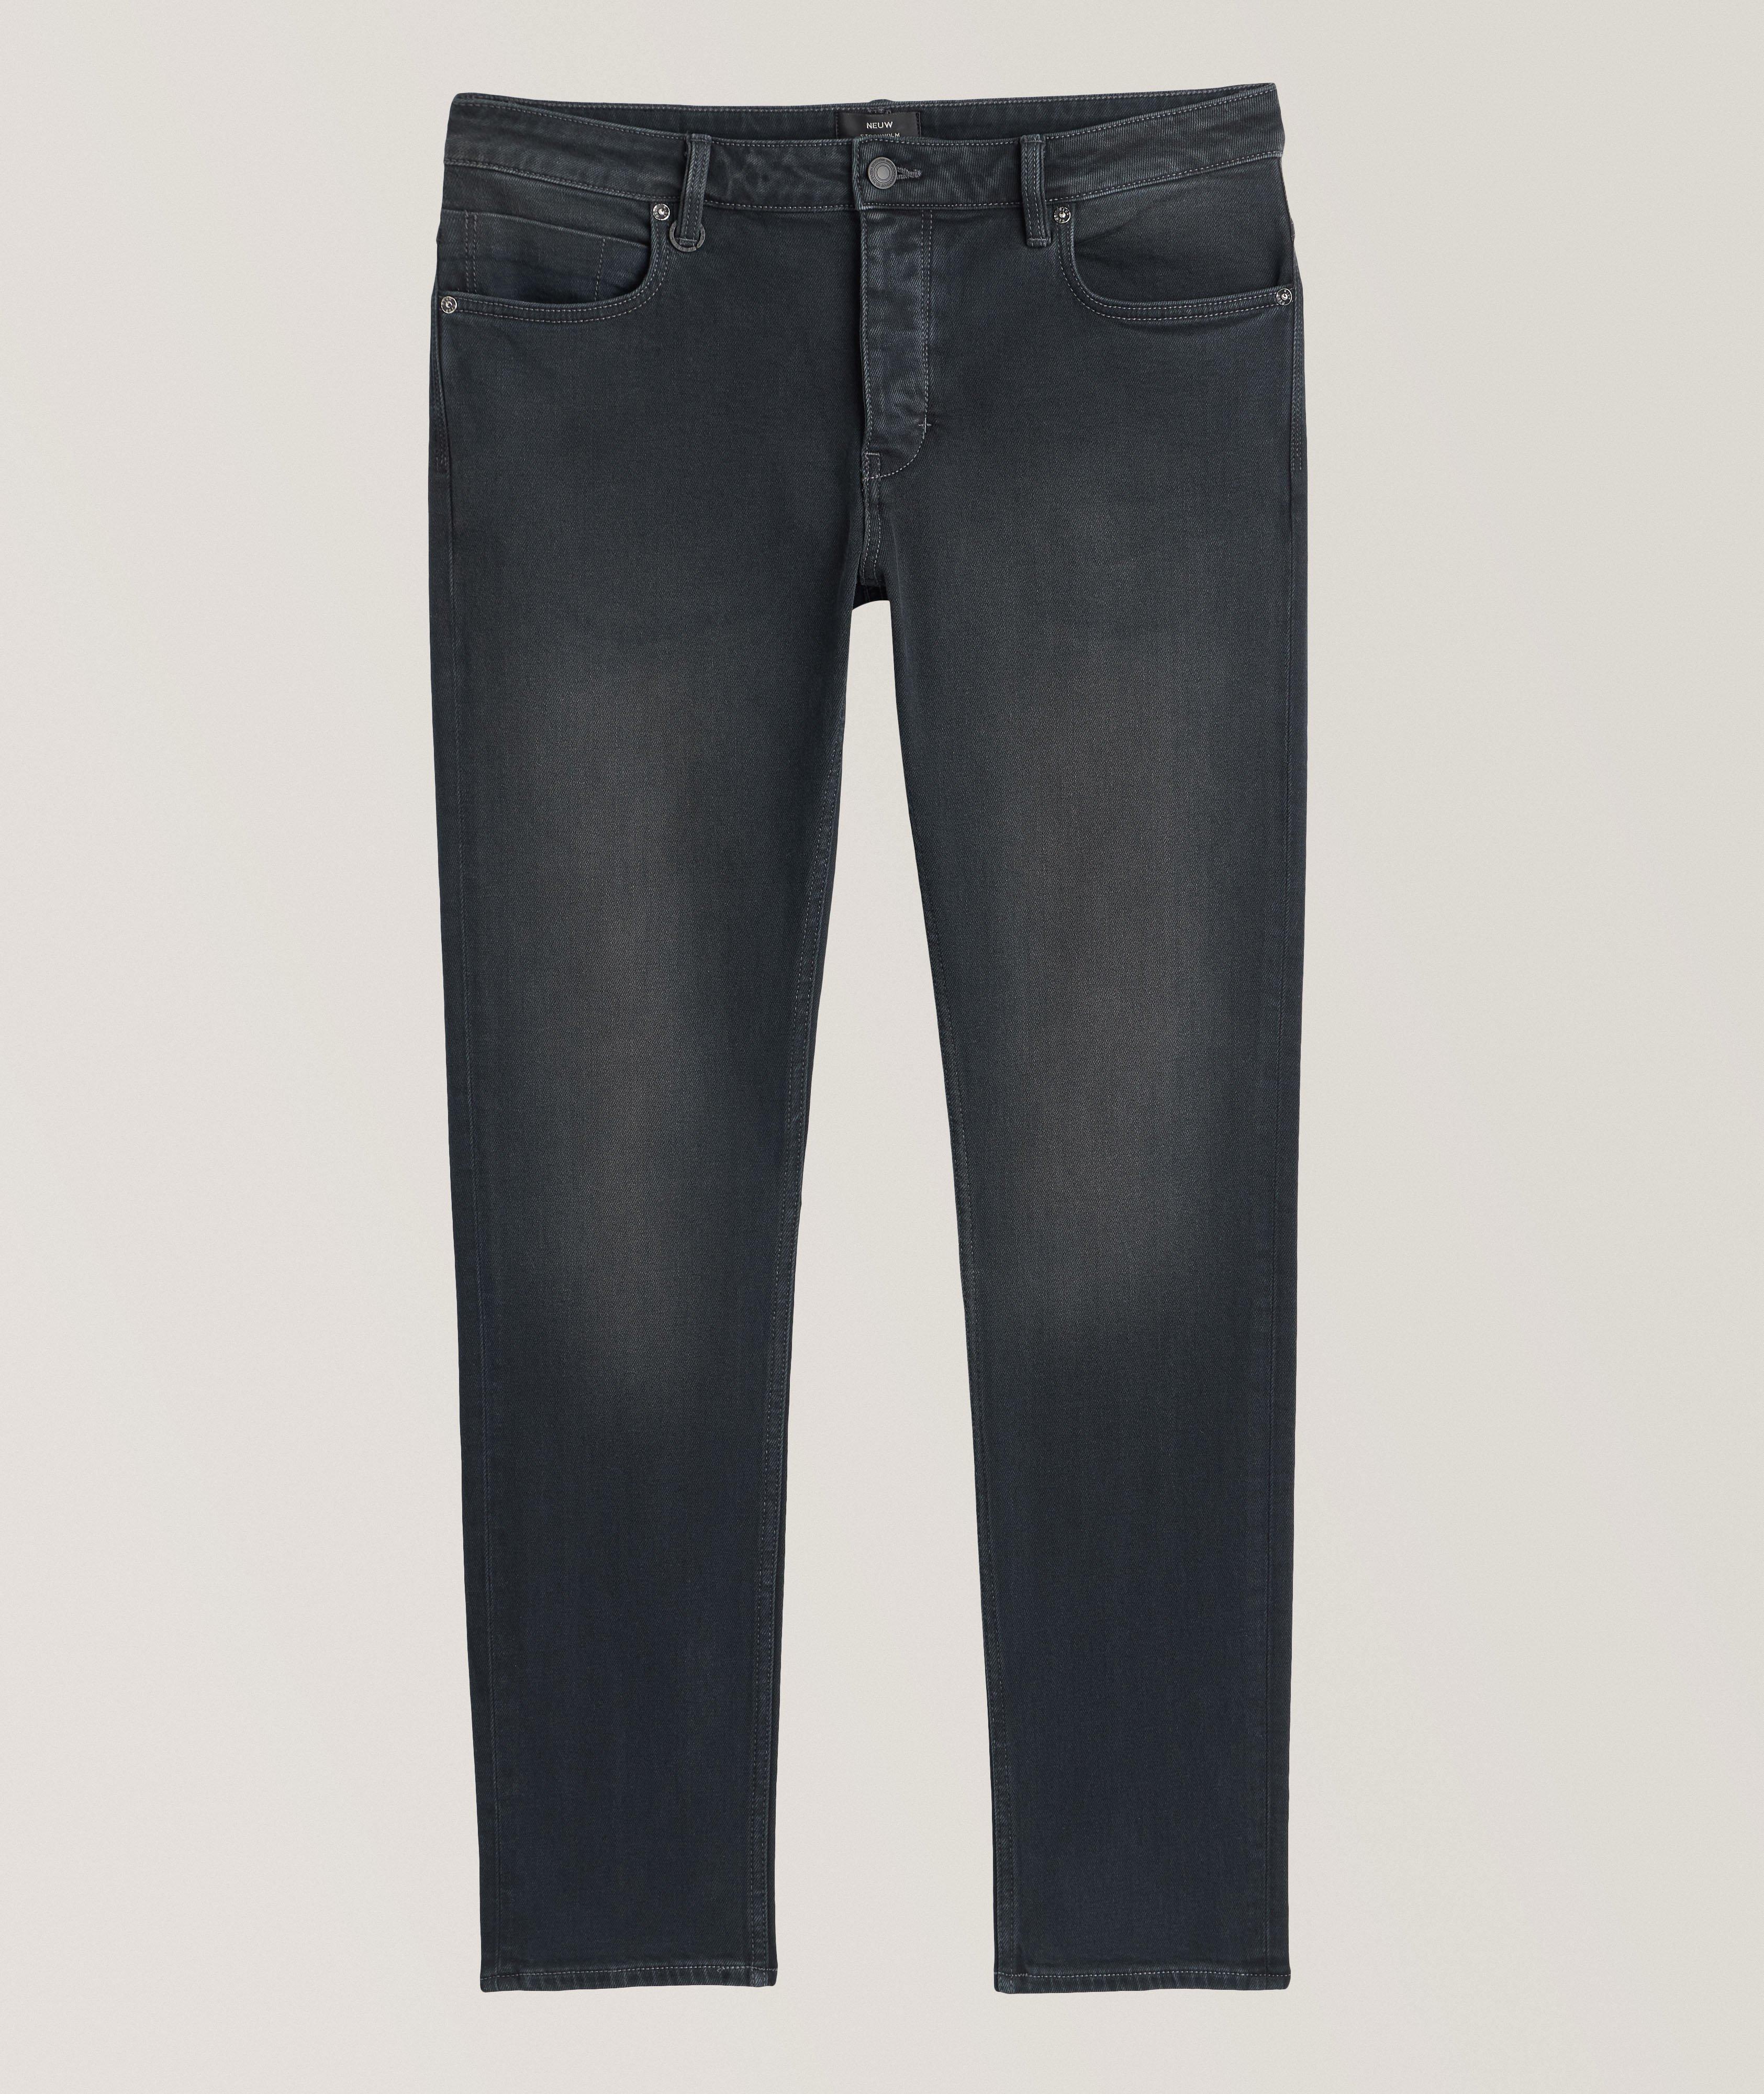 Lou Slim-Fit Stretch-Cotton Jeans image 0